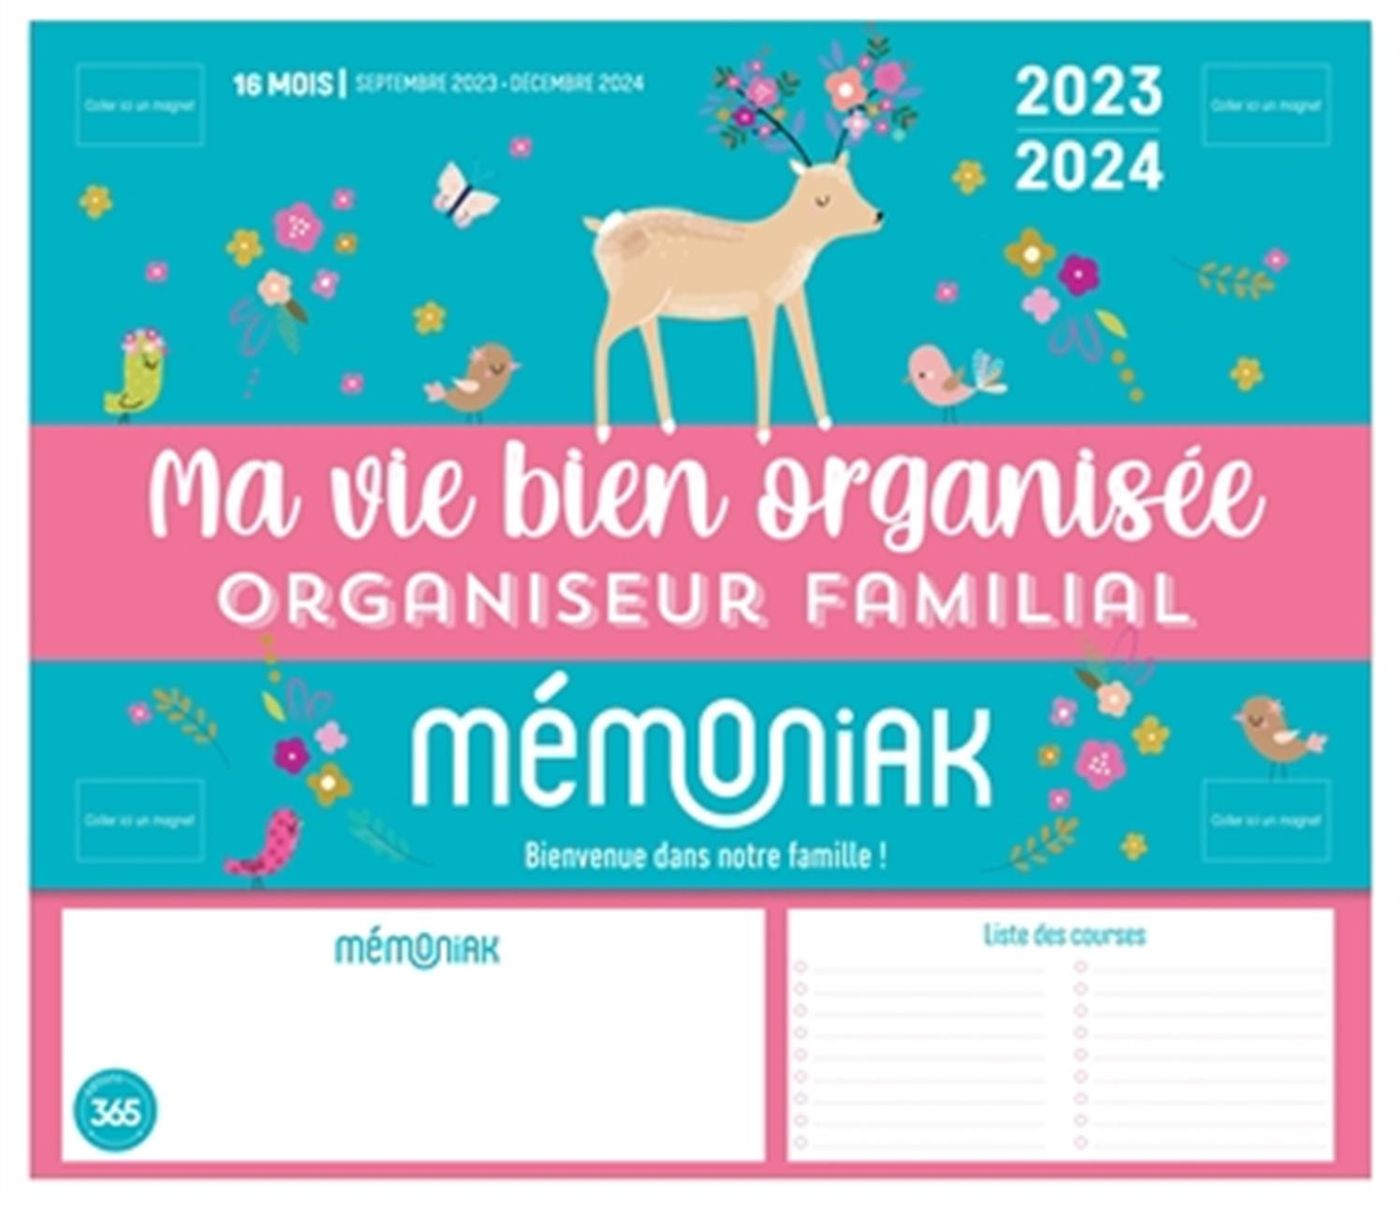 Calendrier mensuel famille organisée (édition 2024) - Collectif